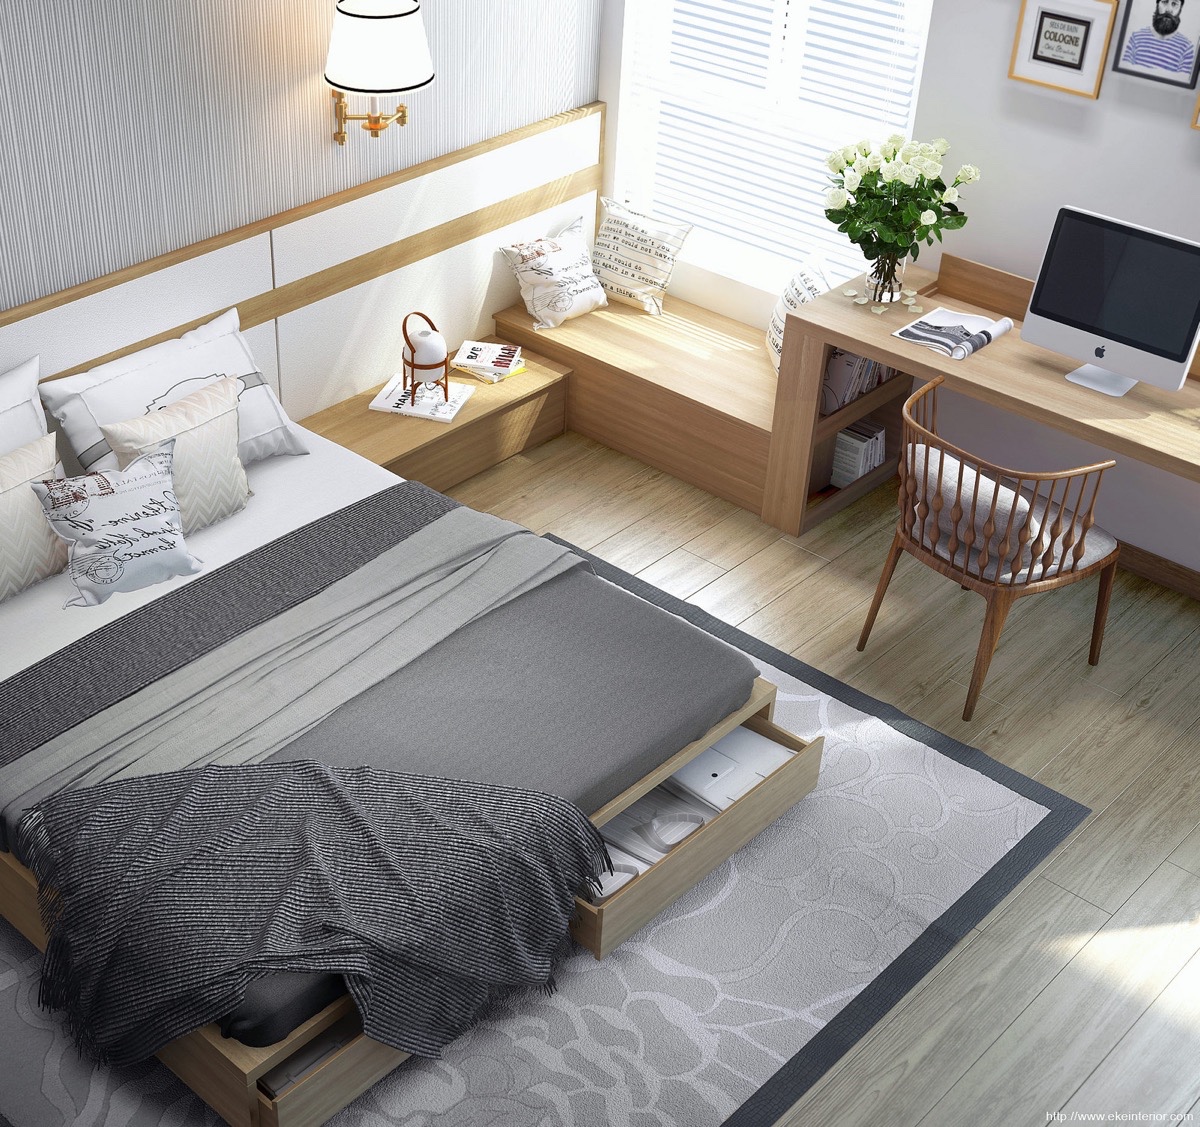 Modern bedroom design ideas with luxurious decoration "width =" 1200 "height =" 1127 "srcset =" https://mileray.com/wp-content/uploads/2020/05/1588510877_893_10-Modern-Bedroom-Design-Ideas-With-Luxury-Decorating-Ideas.jpg 1200w, https: // mileray.com/wp-content/uploads/2016/06/Eke-Interior-300x282.jpg 300w, https://mileray.com/wp-content/uploads/2016/06/Eke-Interior-768x721.jpg 768w, https://mileray.com/wp-content/uploads/2016/06/Eke-Interior-1024x962.jpg 1024w, https://mileray.com/wp-content/uploads/2016/06/Eke-Interior -696x654 .jpg 696w, https://mileray.com/wp-content/uploads/2016/06/Eke-Interior-1068x1003.jpg 1068w, https://mileray.com/wp-content/uploads/2016/06 / Eke -Interior-447x420.jpg 447w "sizes =" (maximum width: 1200px) 100vw, 1200px